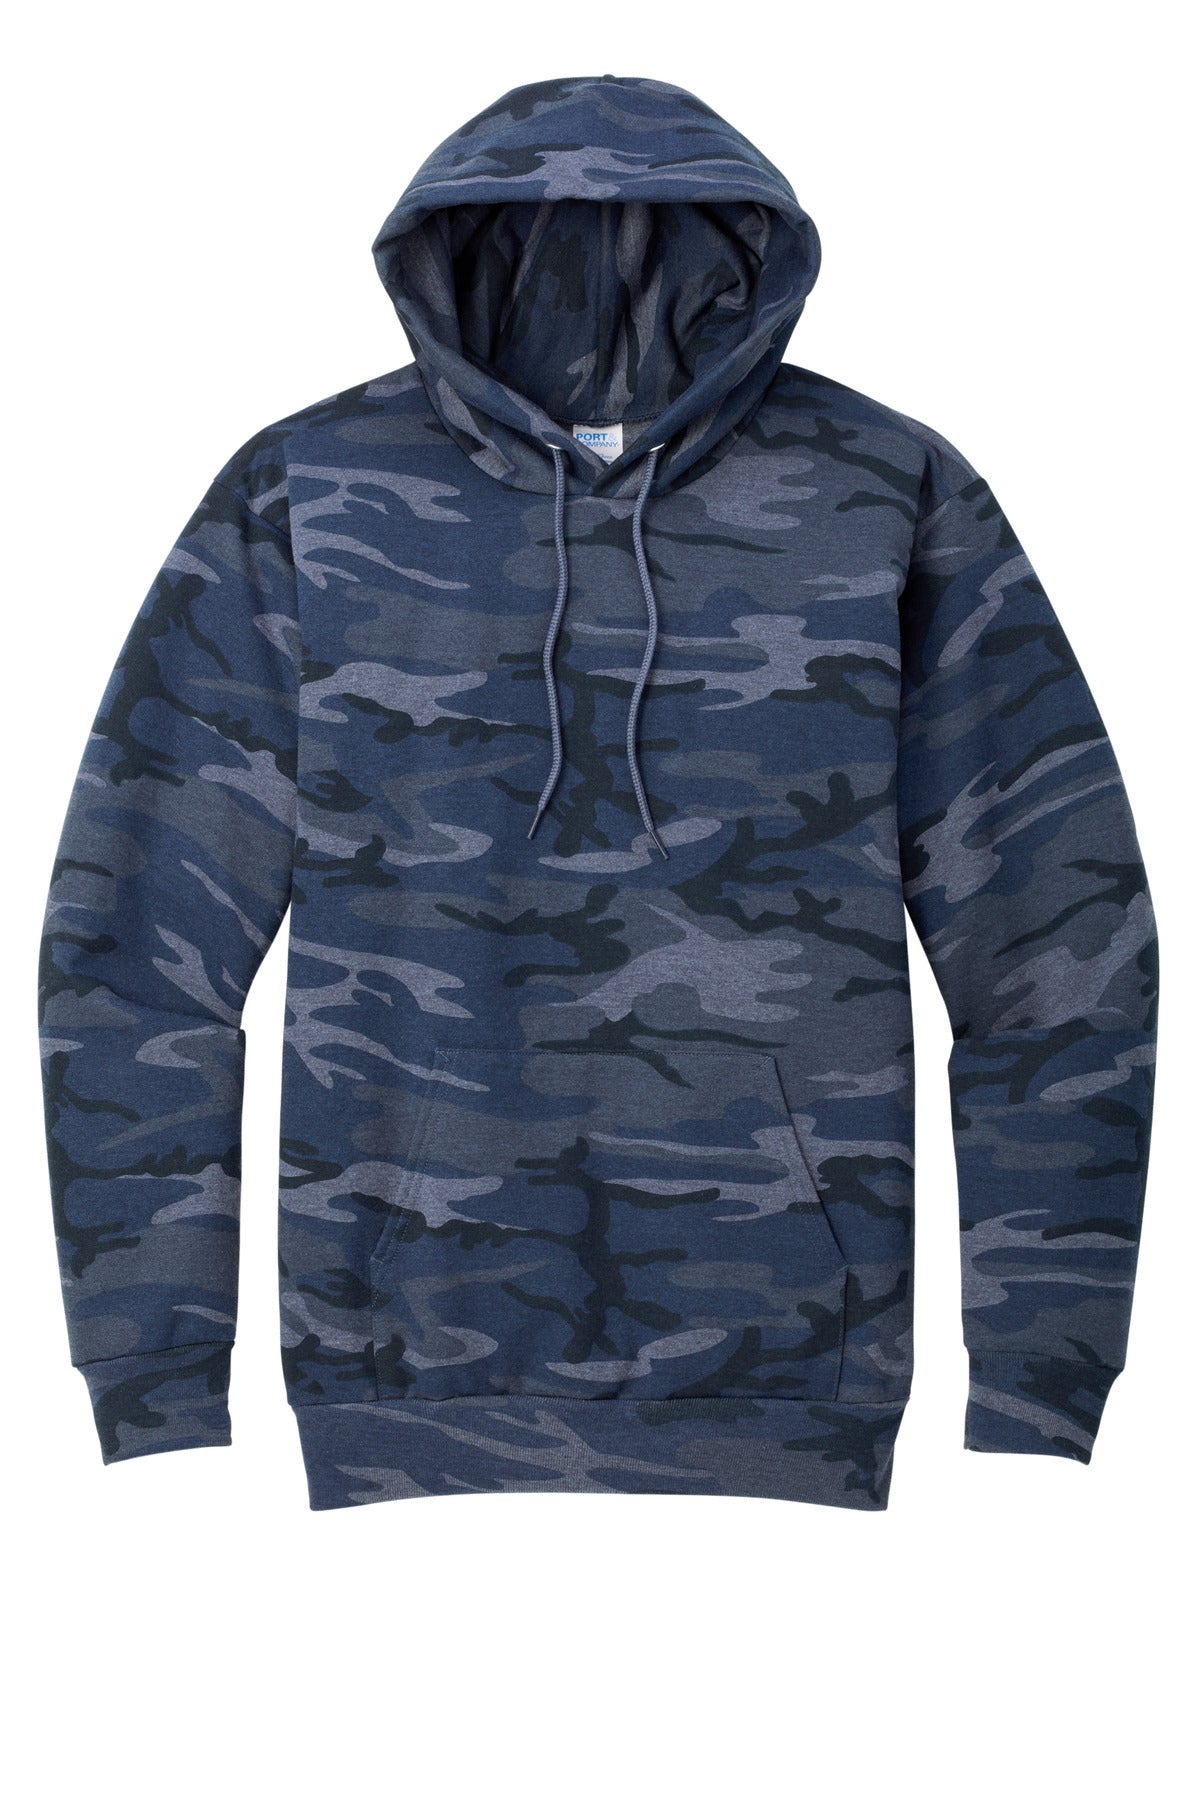 Port & Company Core Fleece Camo Pullover Hooded Sweatshirt. PC78HC